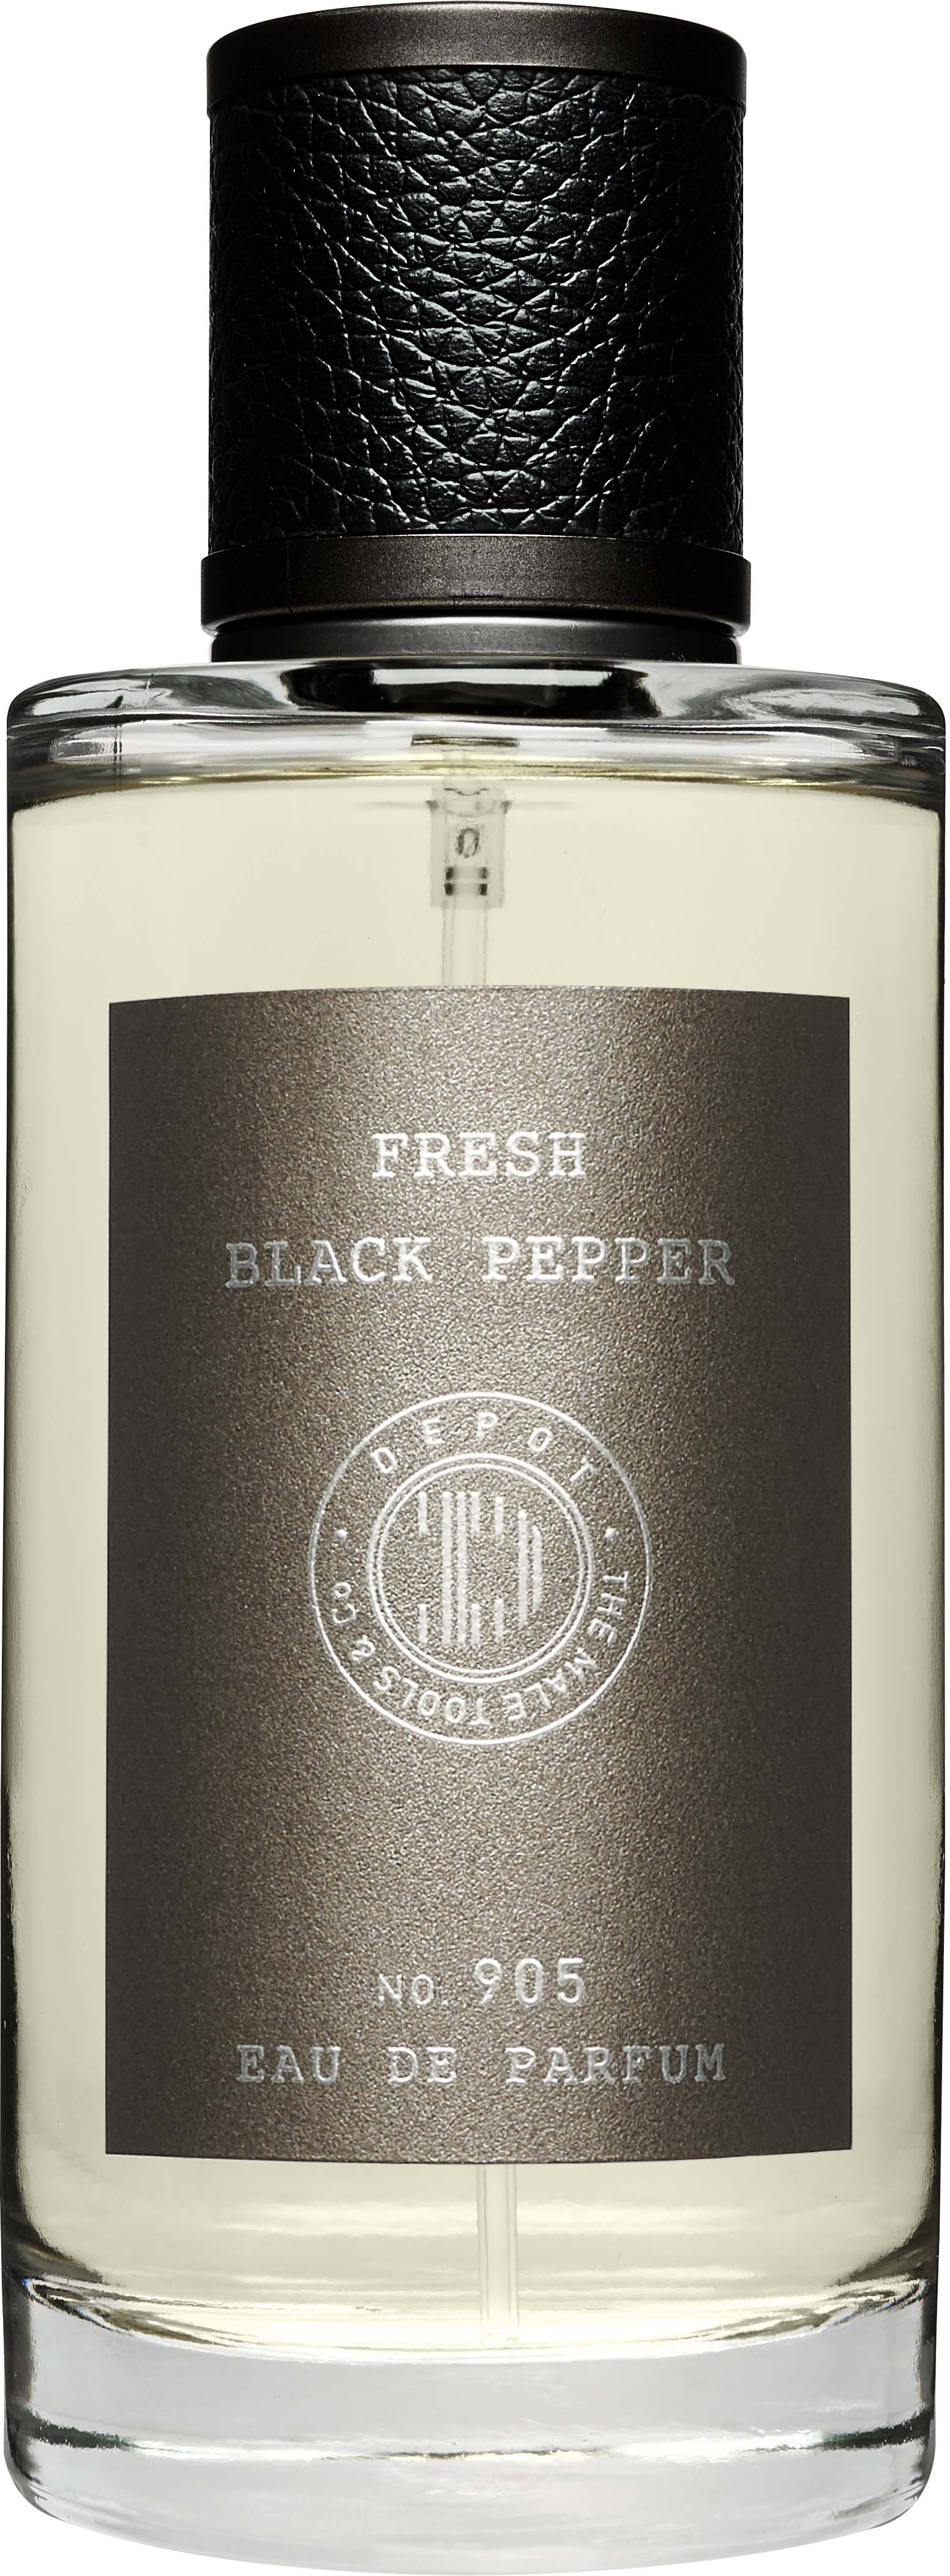 depot no. 905 - fresh black pepper